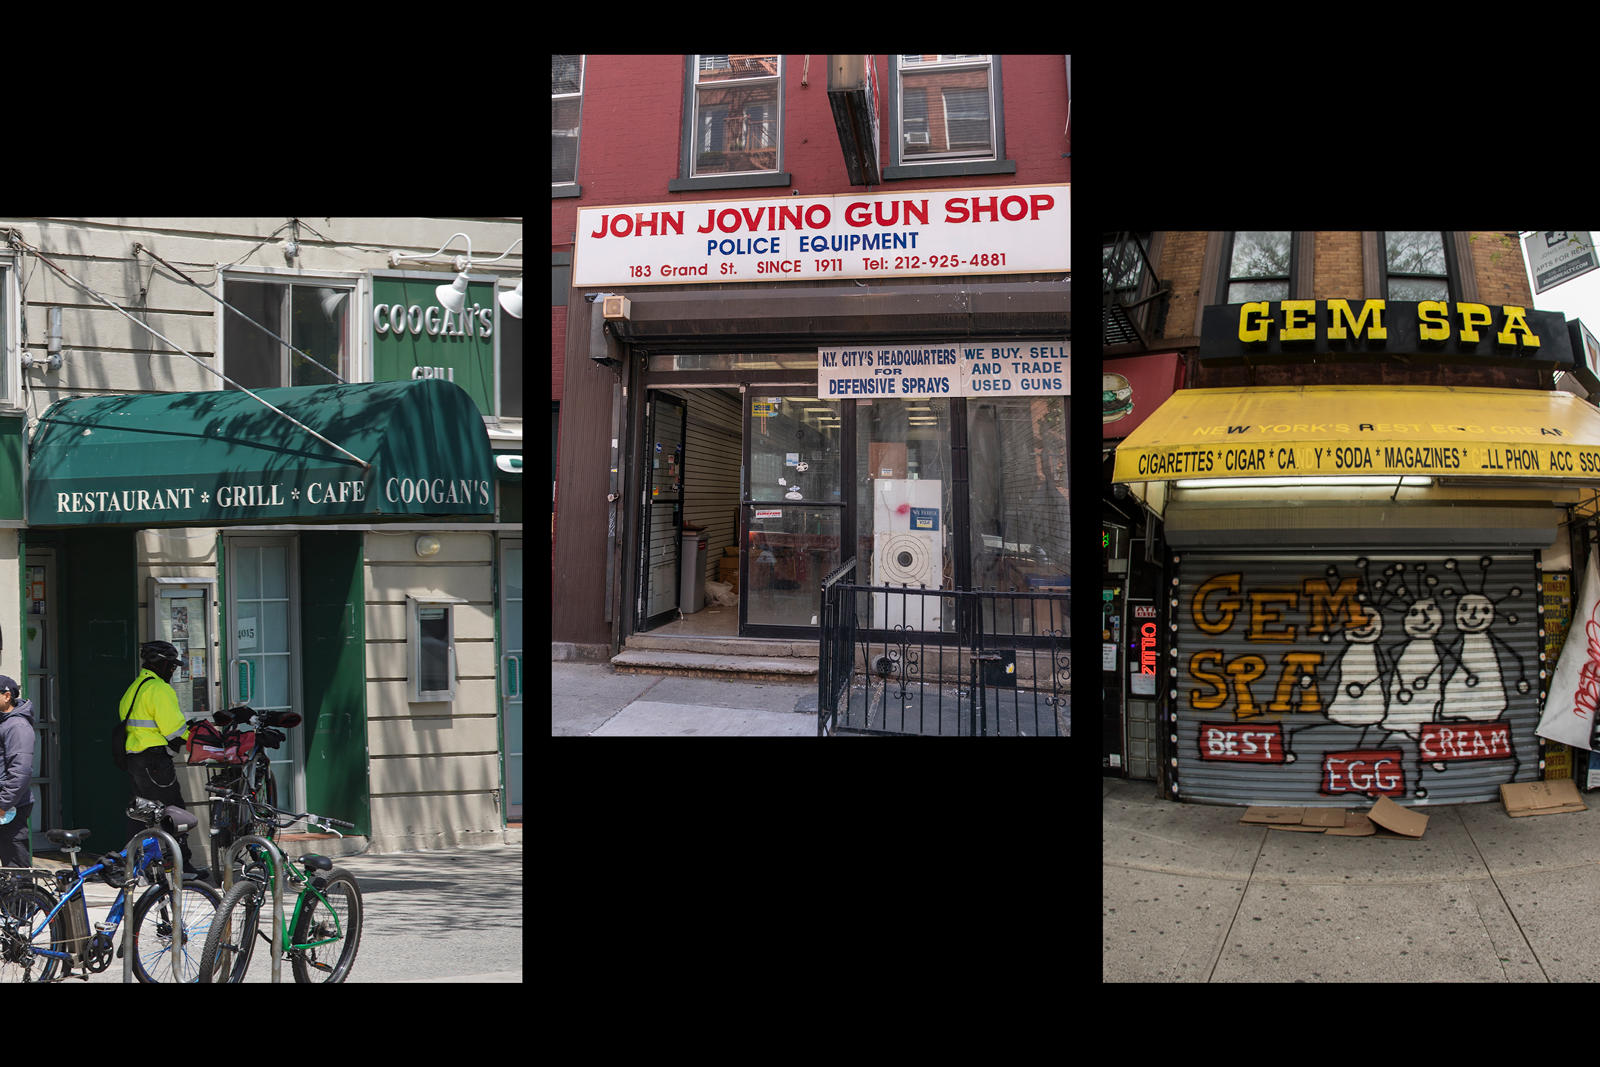 Coogan’s Irish pub in Washington Heights, John Jovino Gun Shop in Little Italy, and Gem Spa in East Village (Getty)